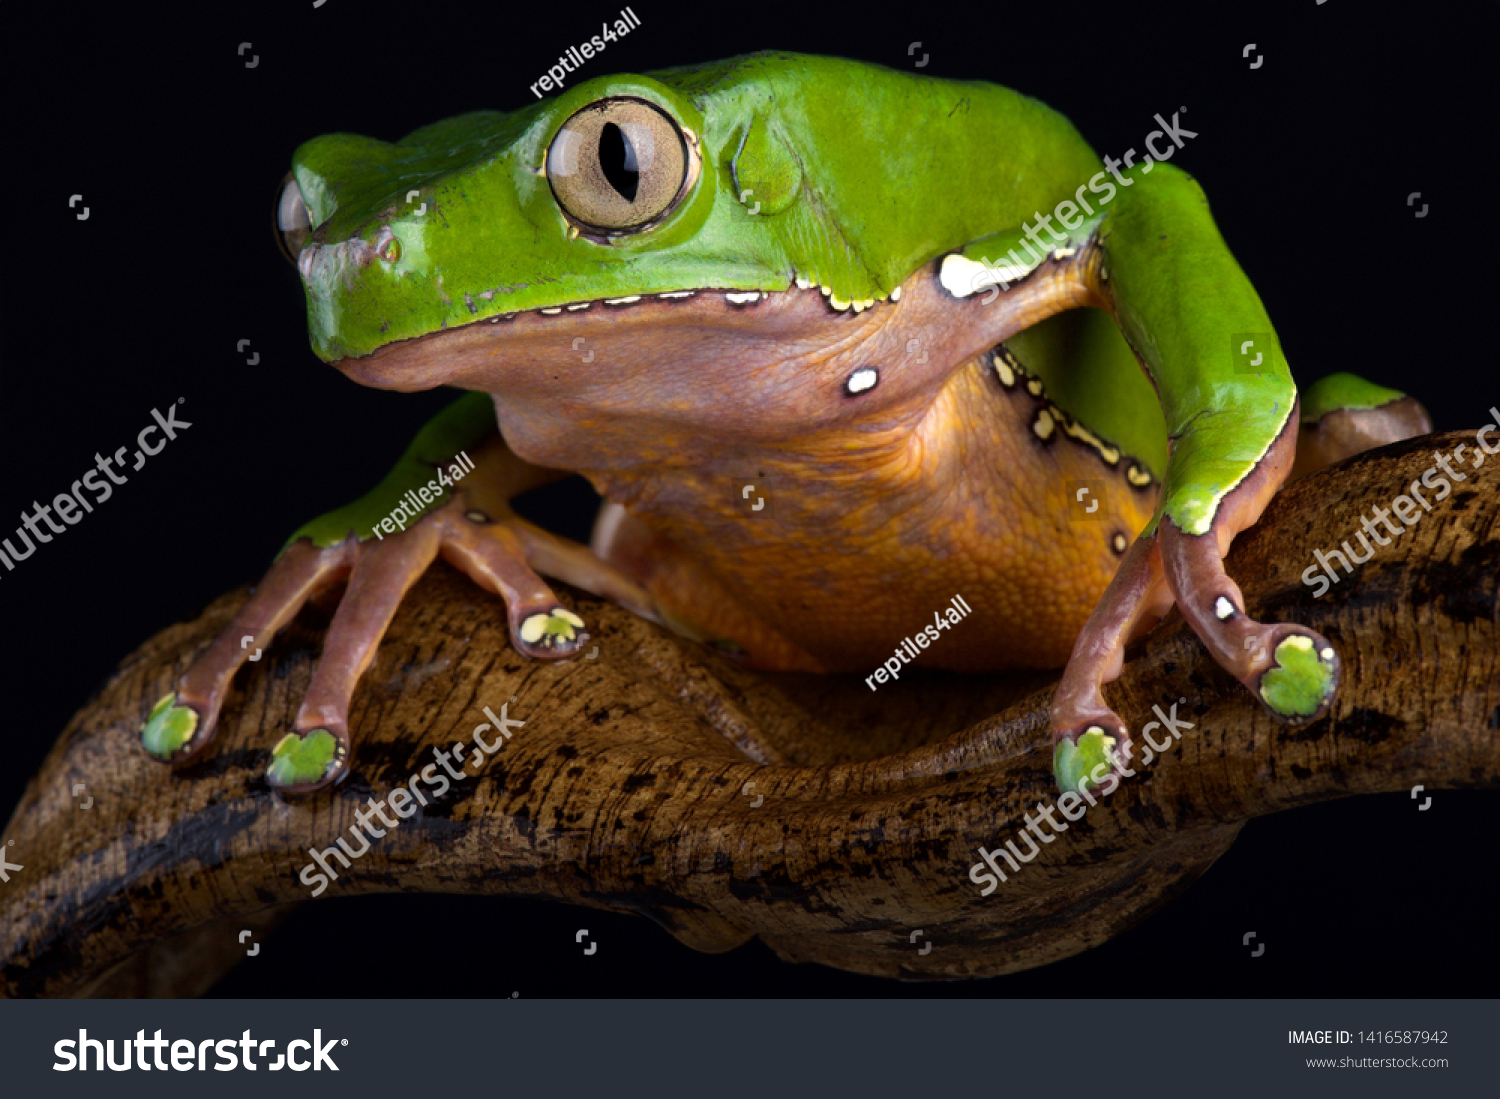 Frog stock